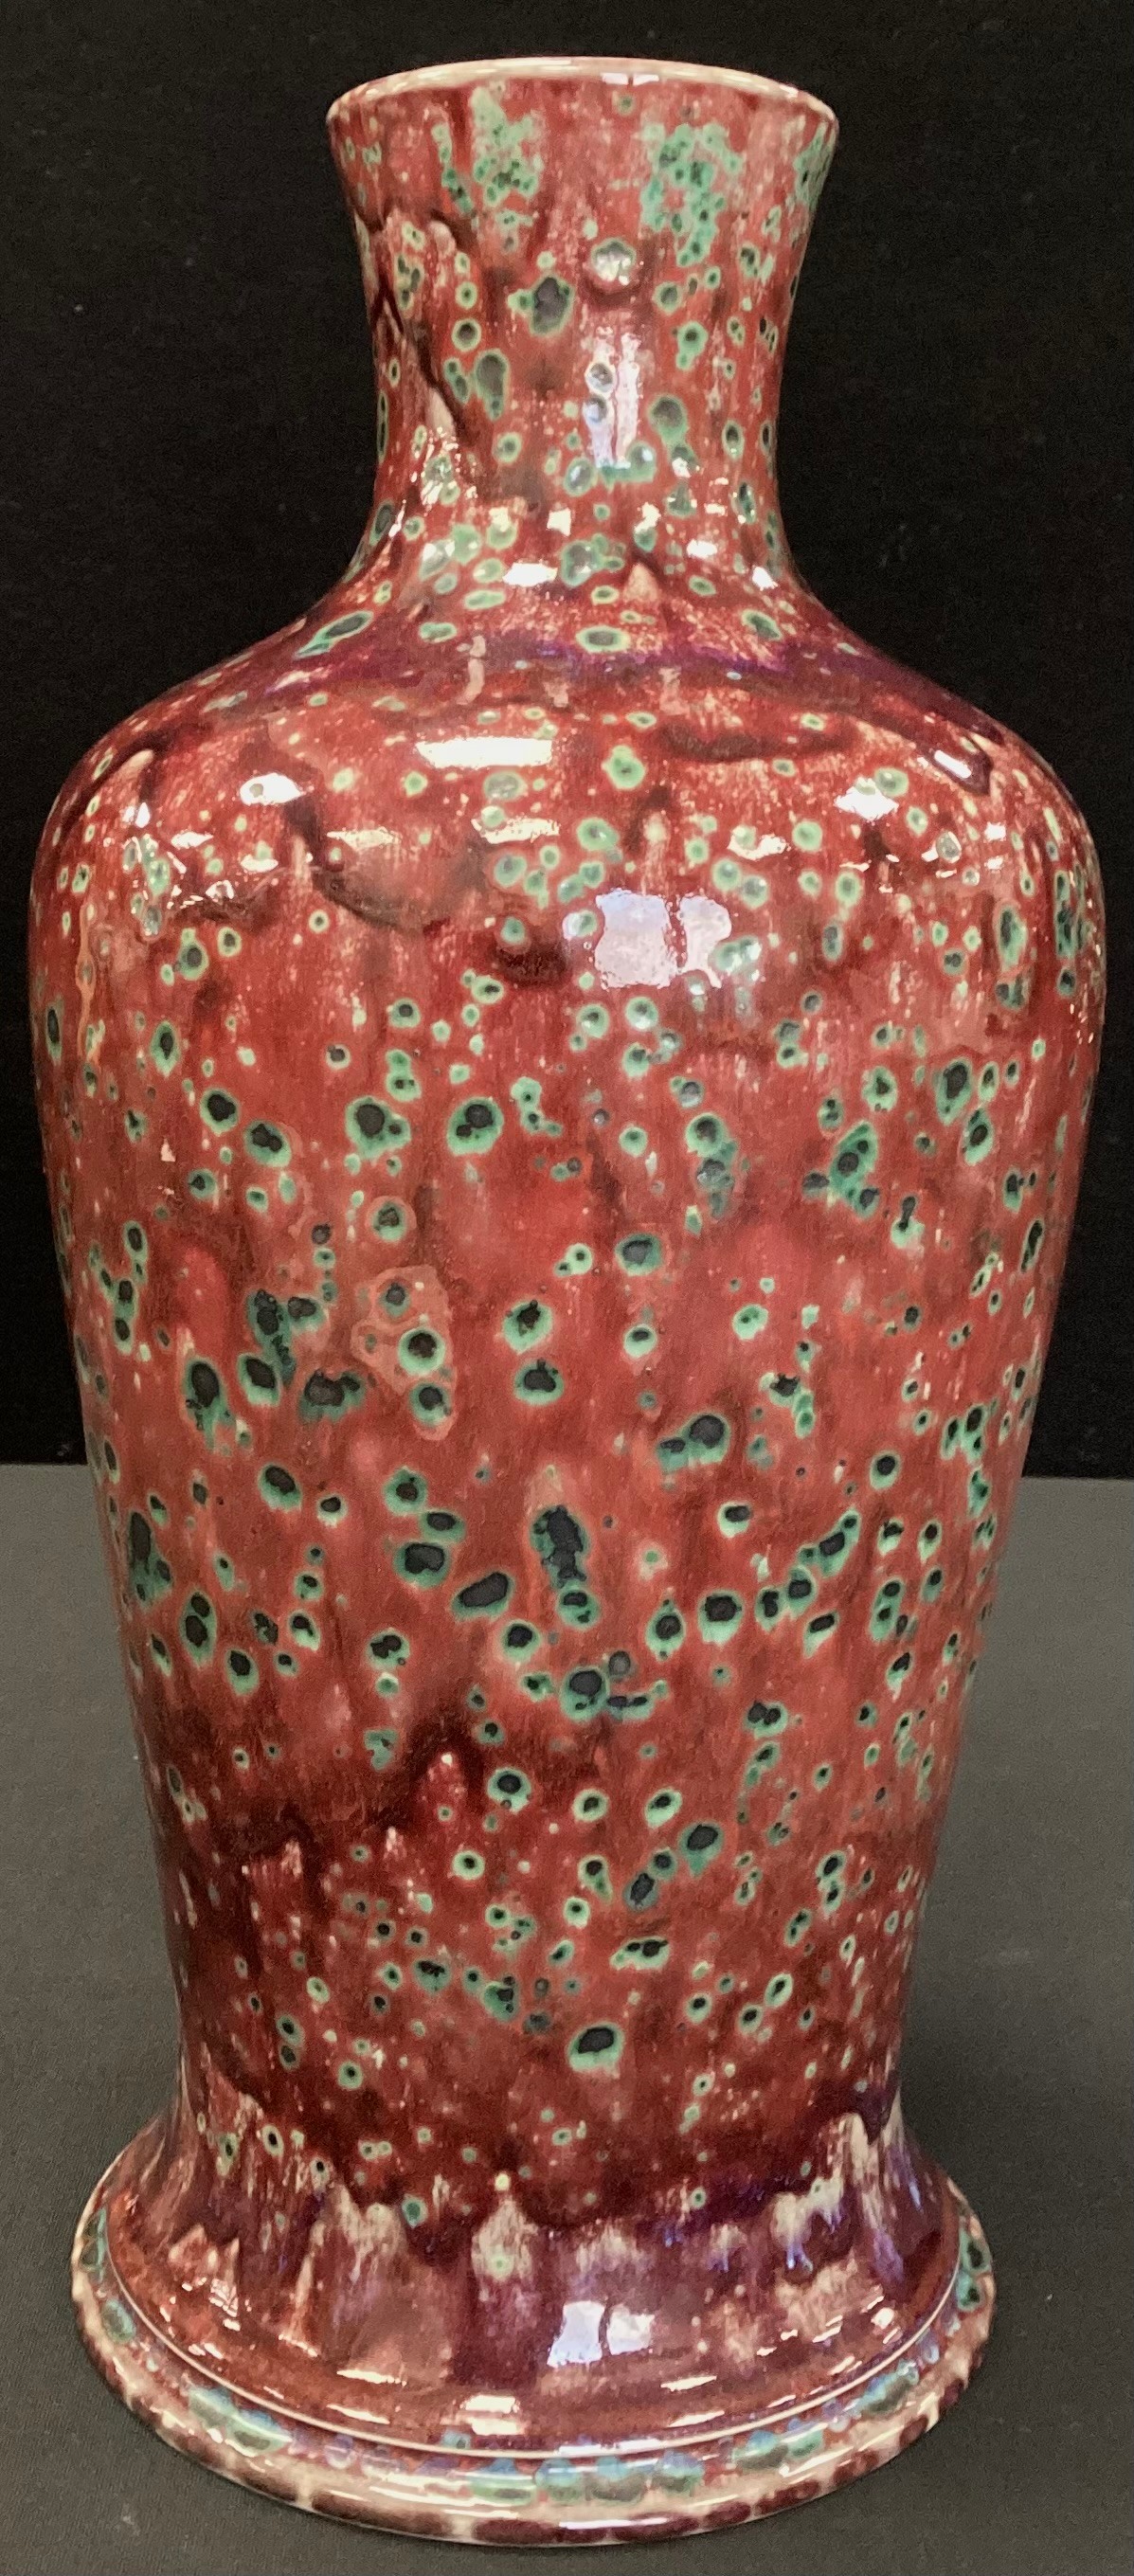 A Cobridge Stoneware Justin Emery Alchemist red mottled bottle vase, impressed marks, 31.5cm high.